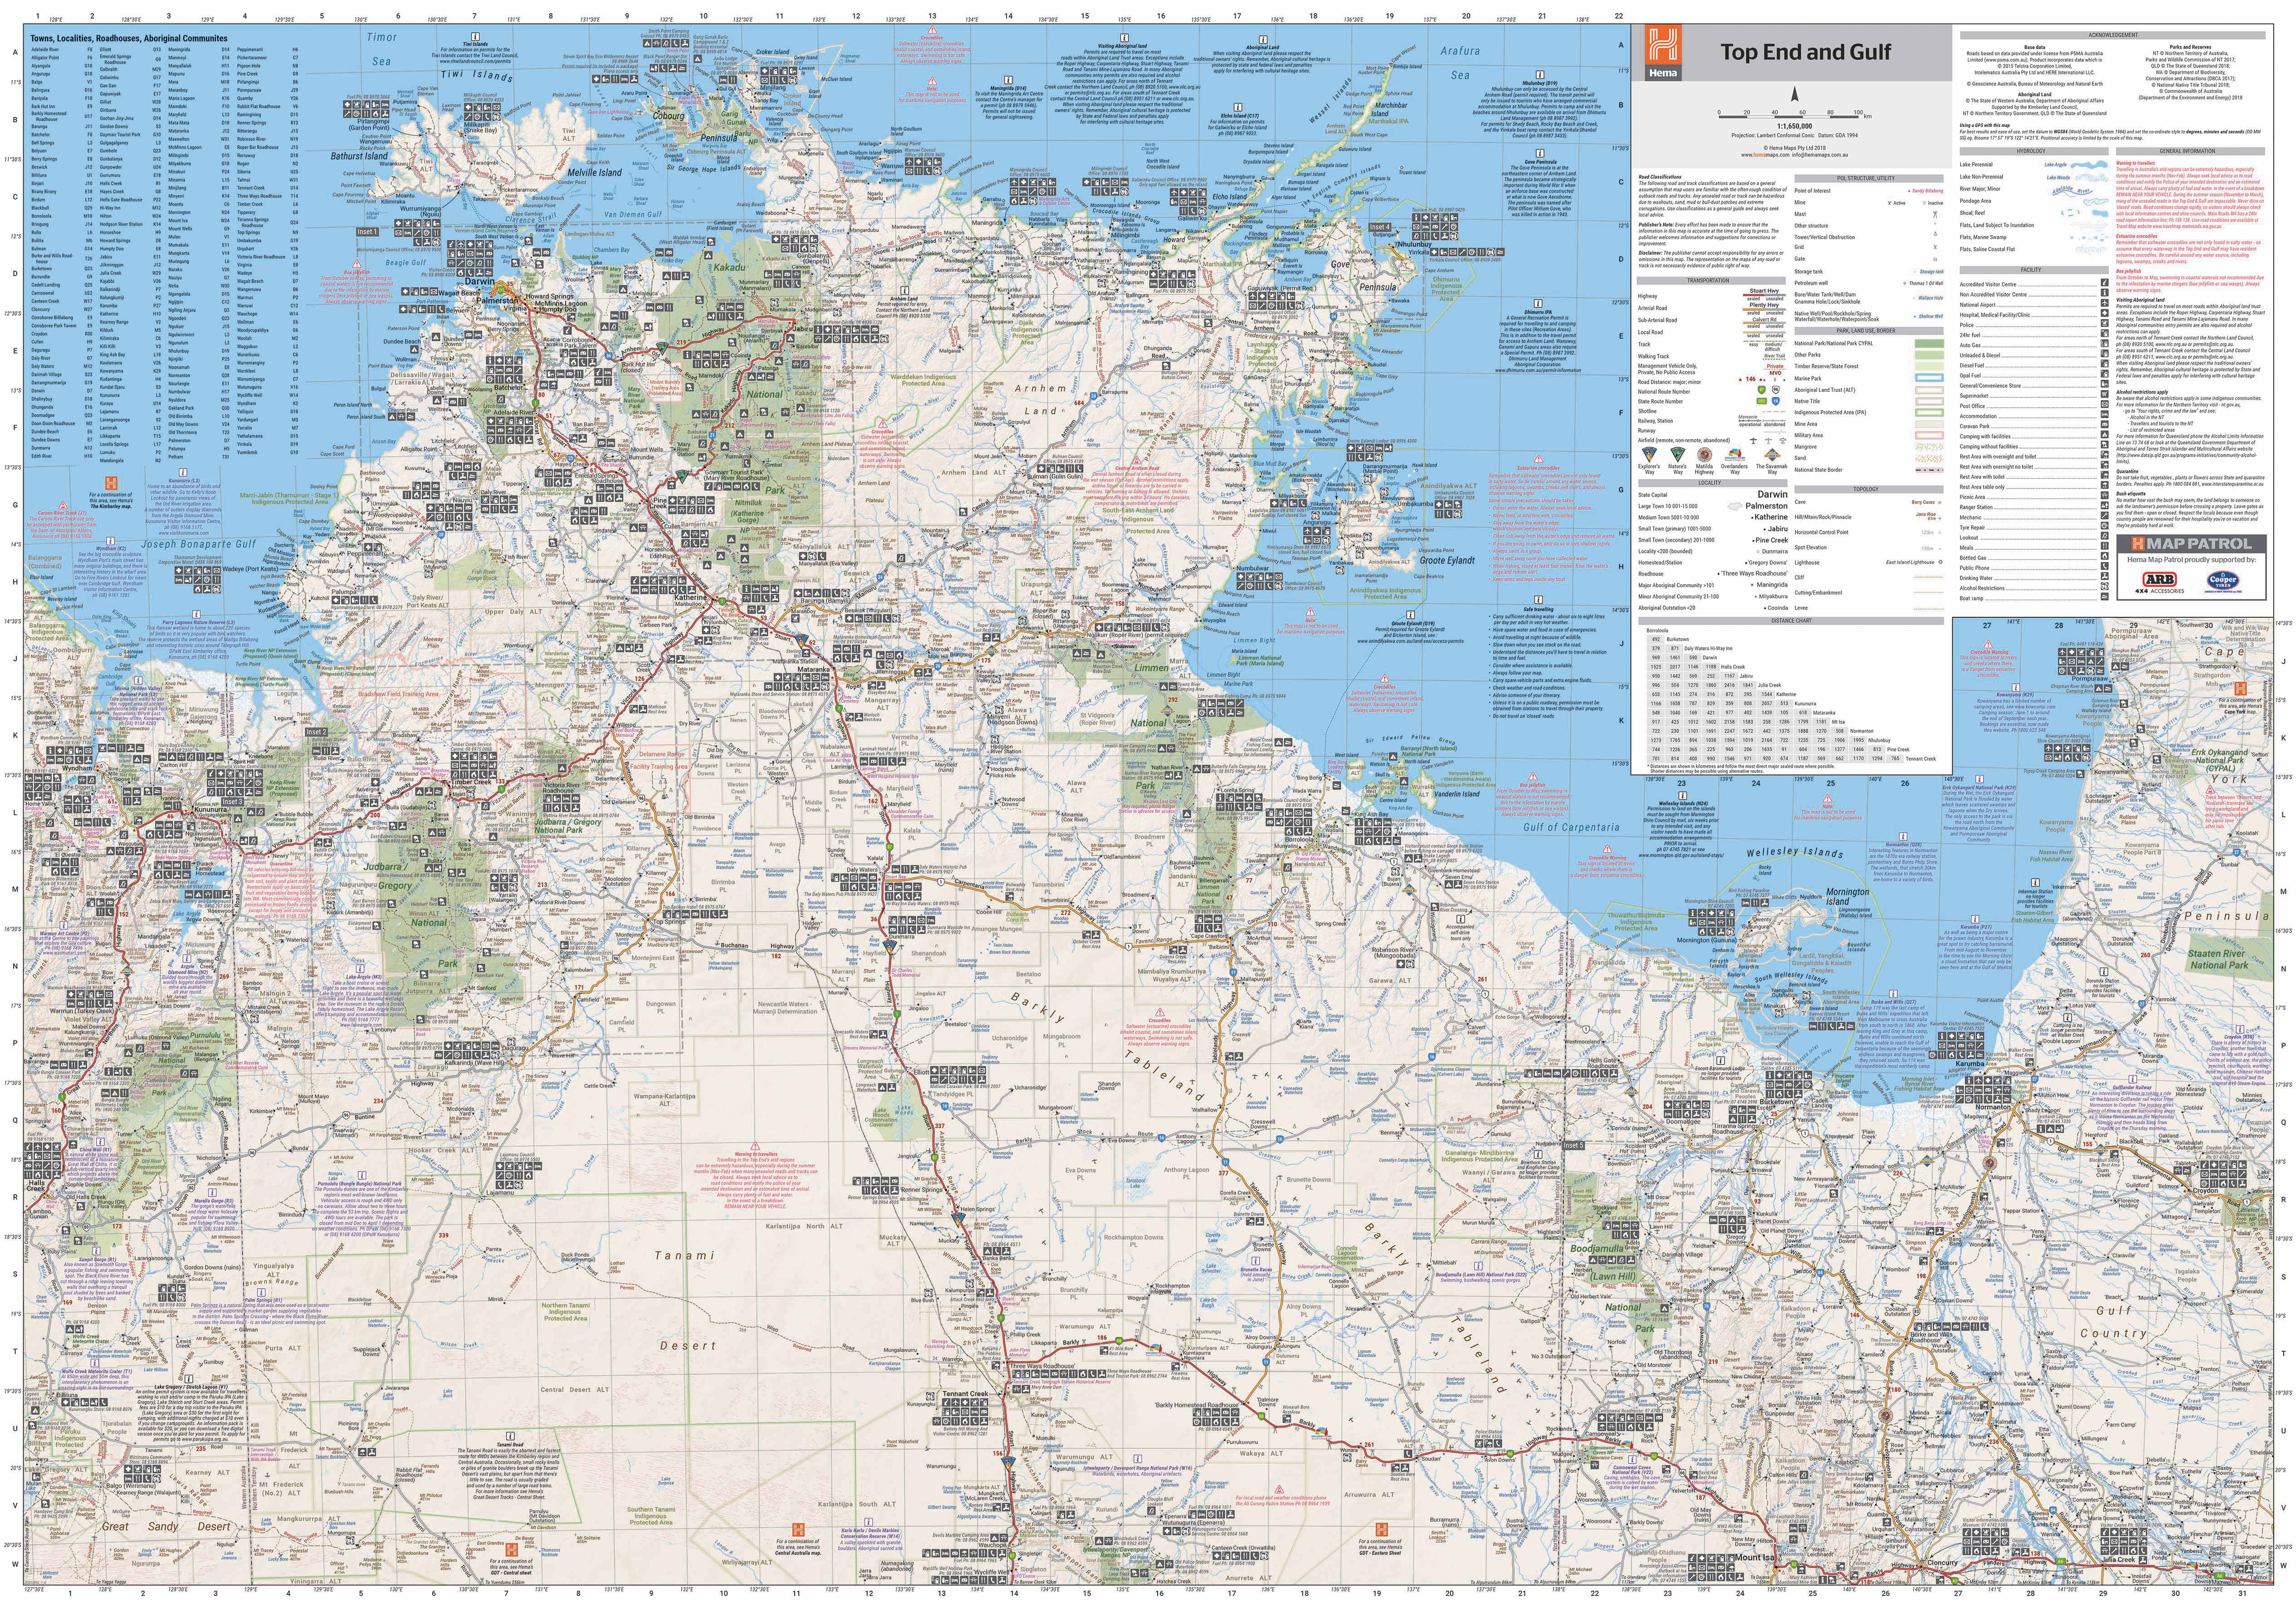 Hema Top End and Gulf Map | Hema